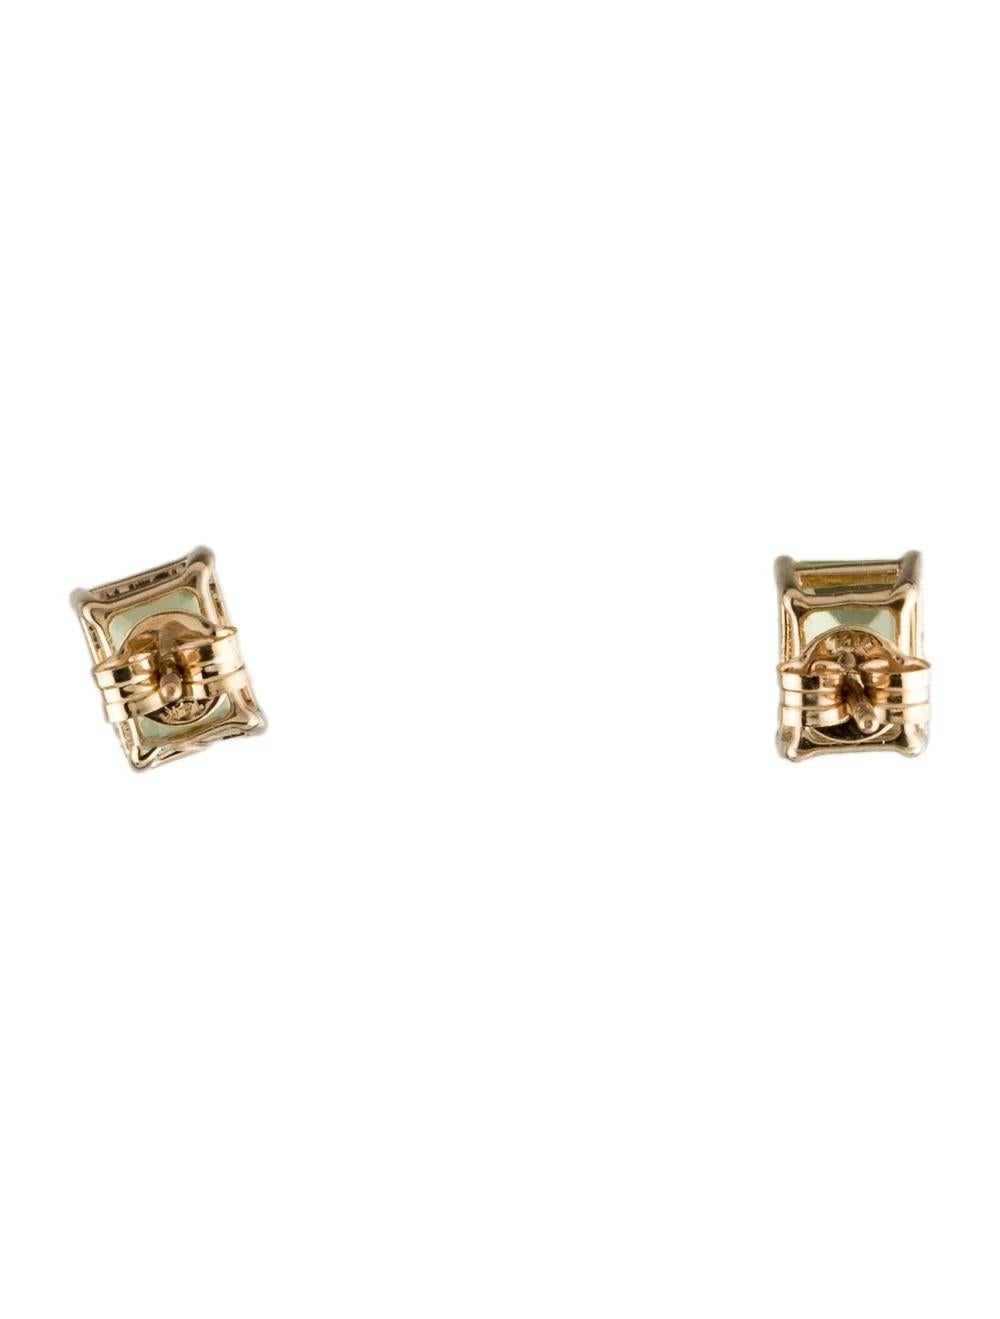 Emerald Cut 14K Yellow Gold Peridot Stud Earrings 2.74ct Rectangular Step Cut - Jewelry For Sale